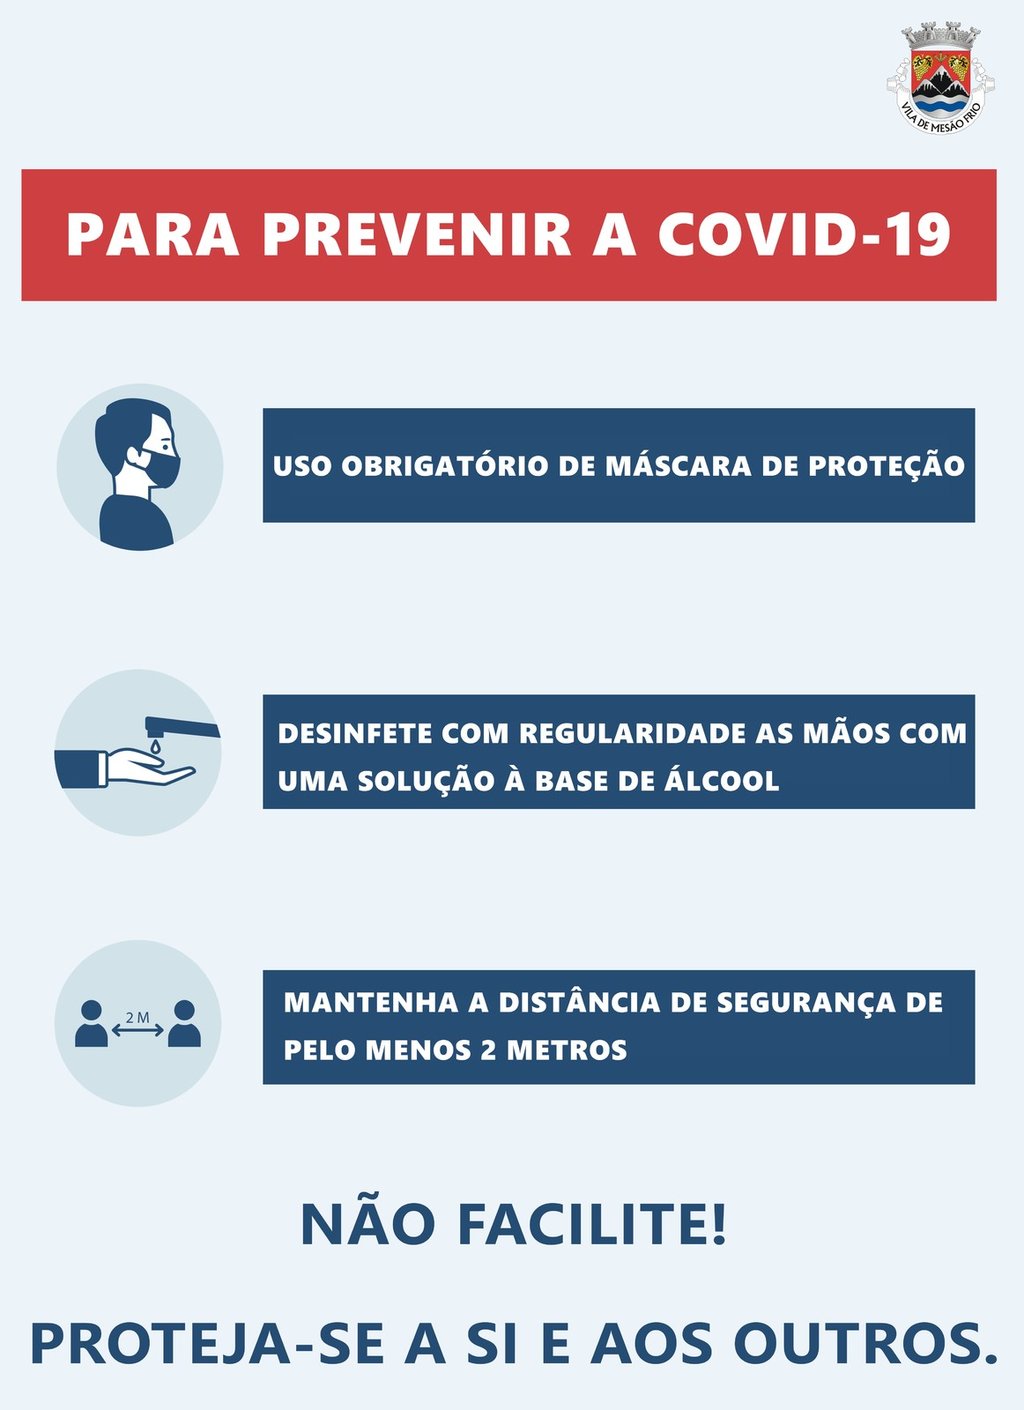 Para prevenir a COVID-19